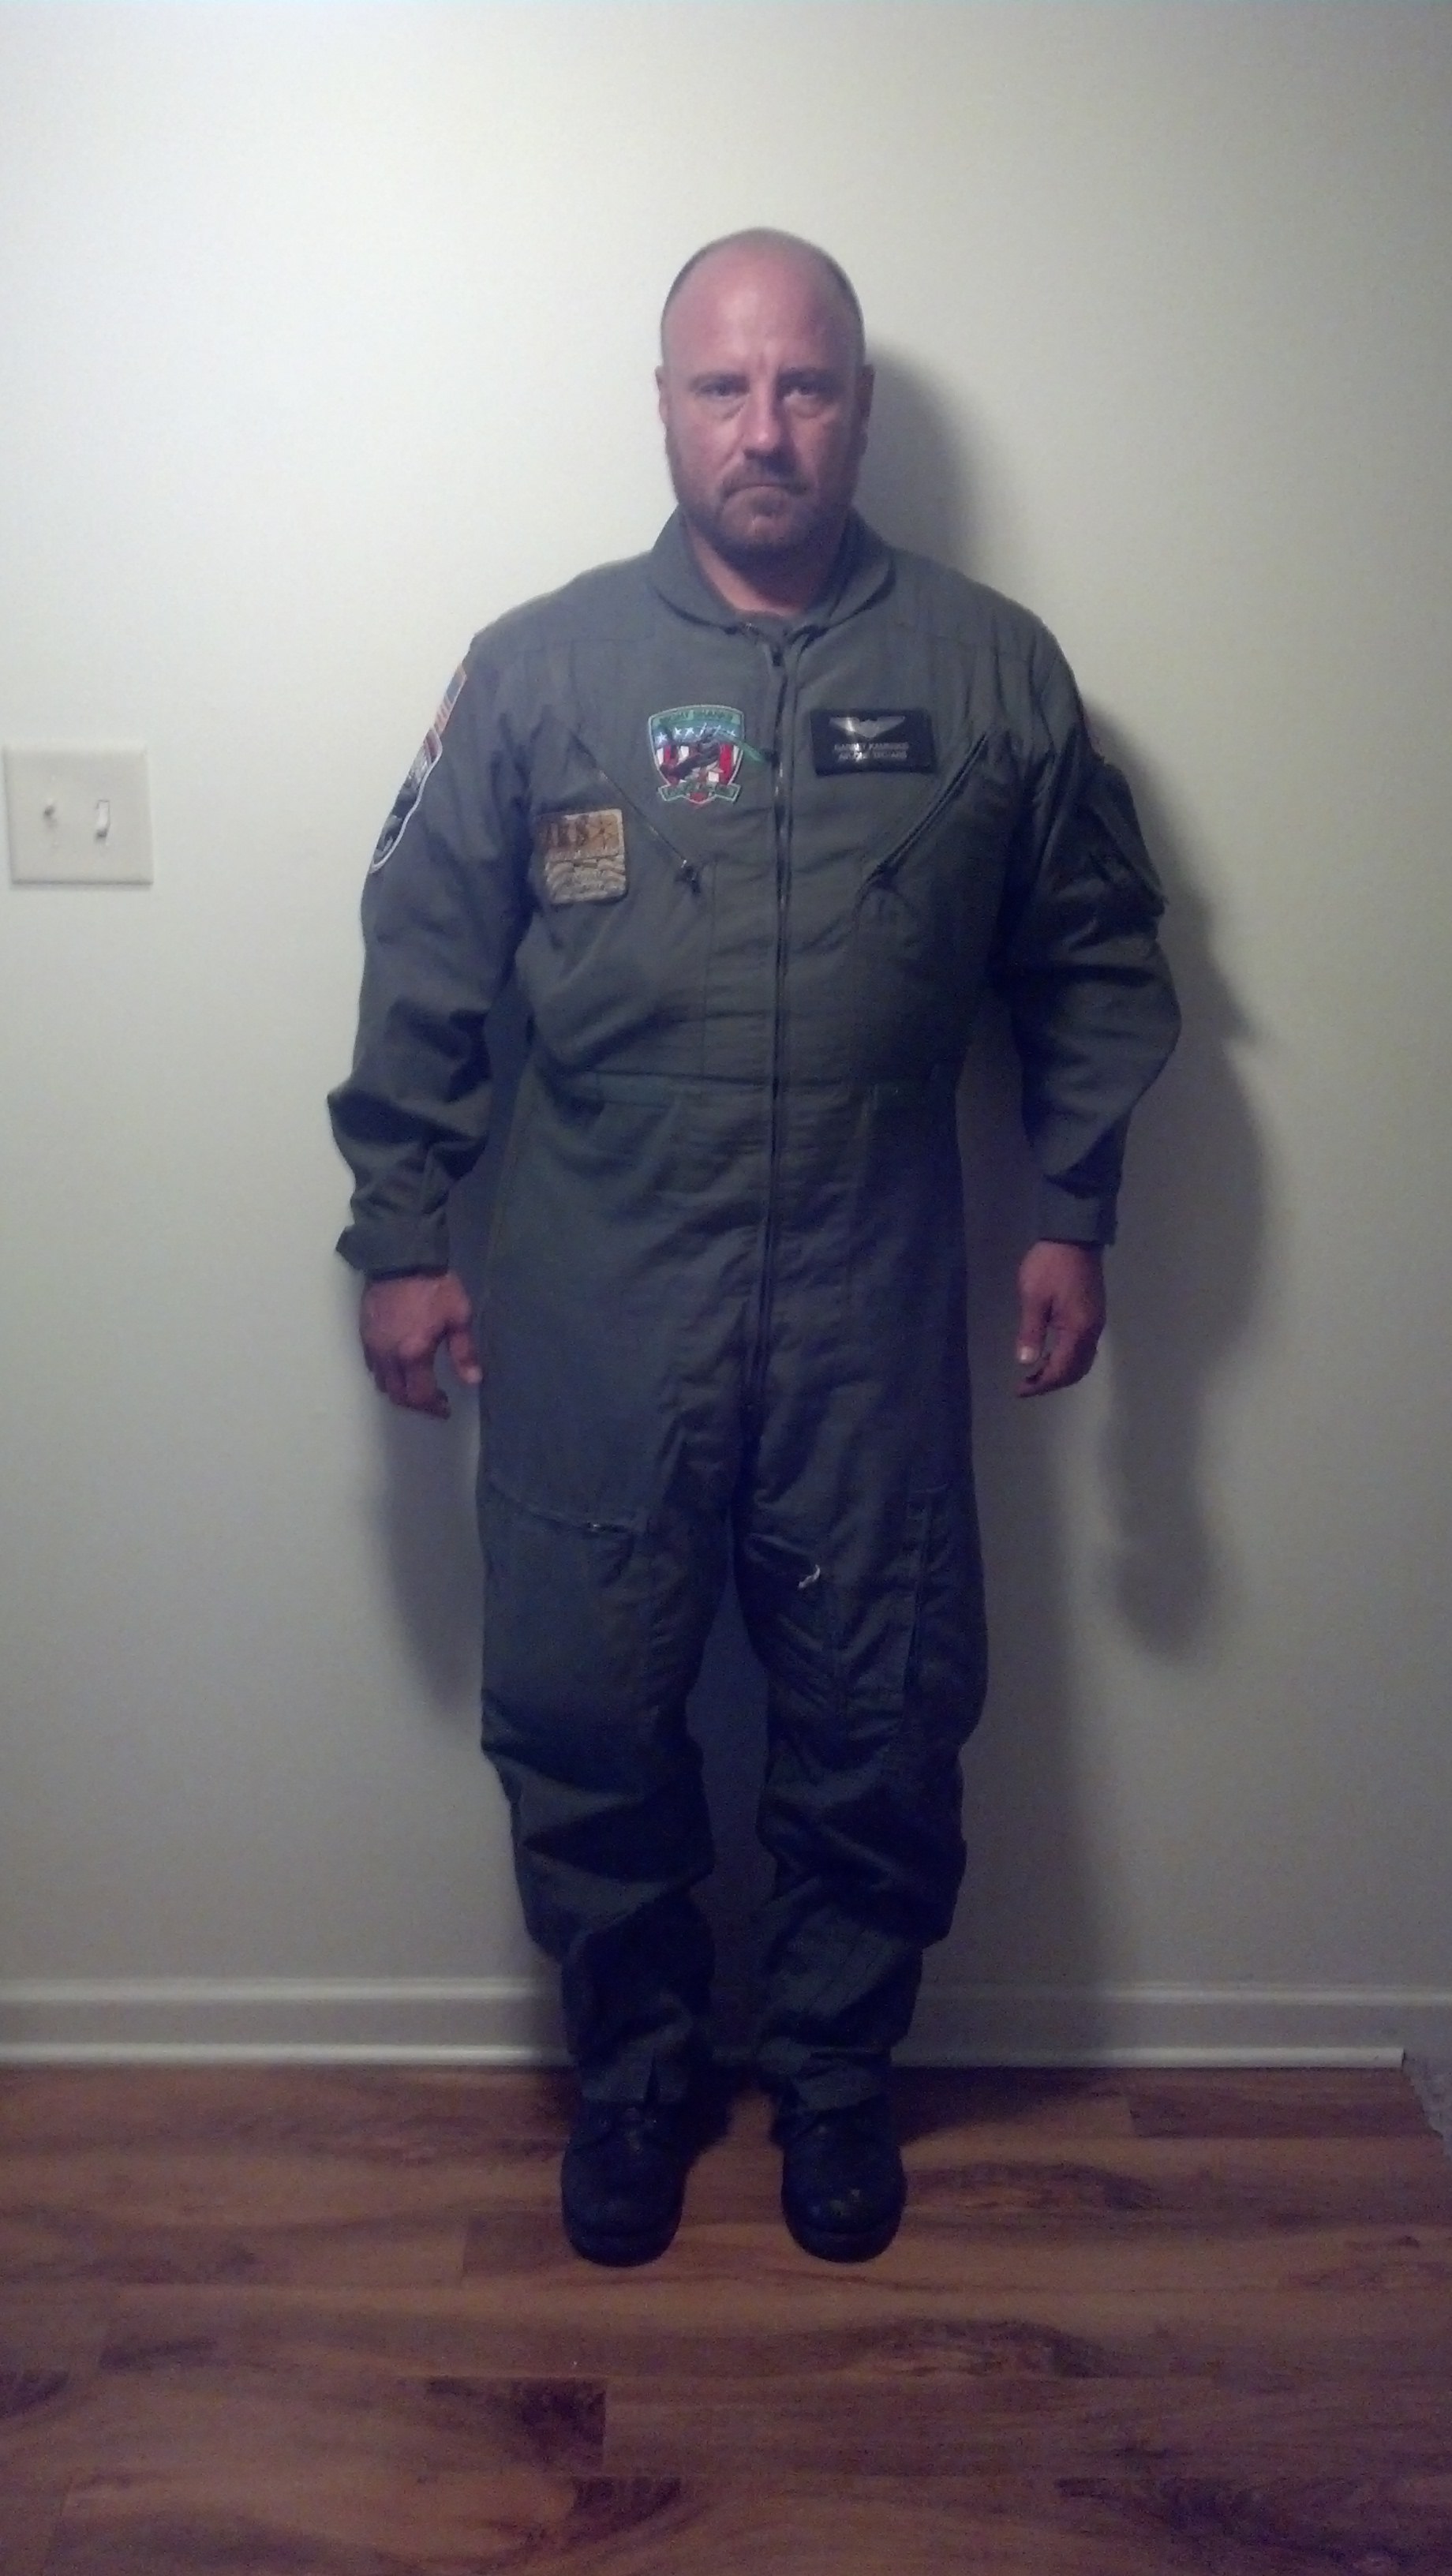 Full body flight suit photo.